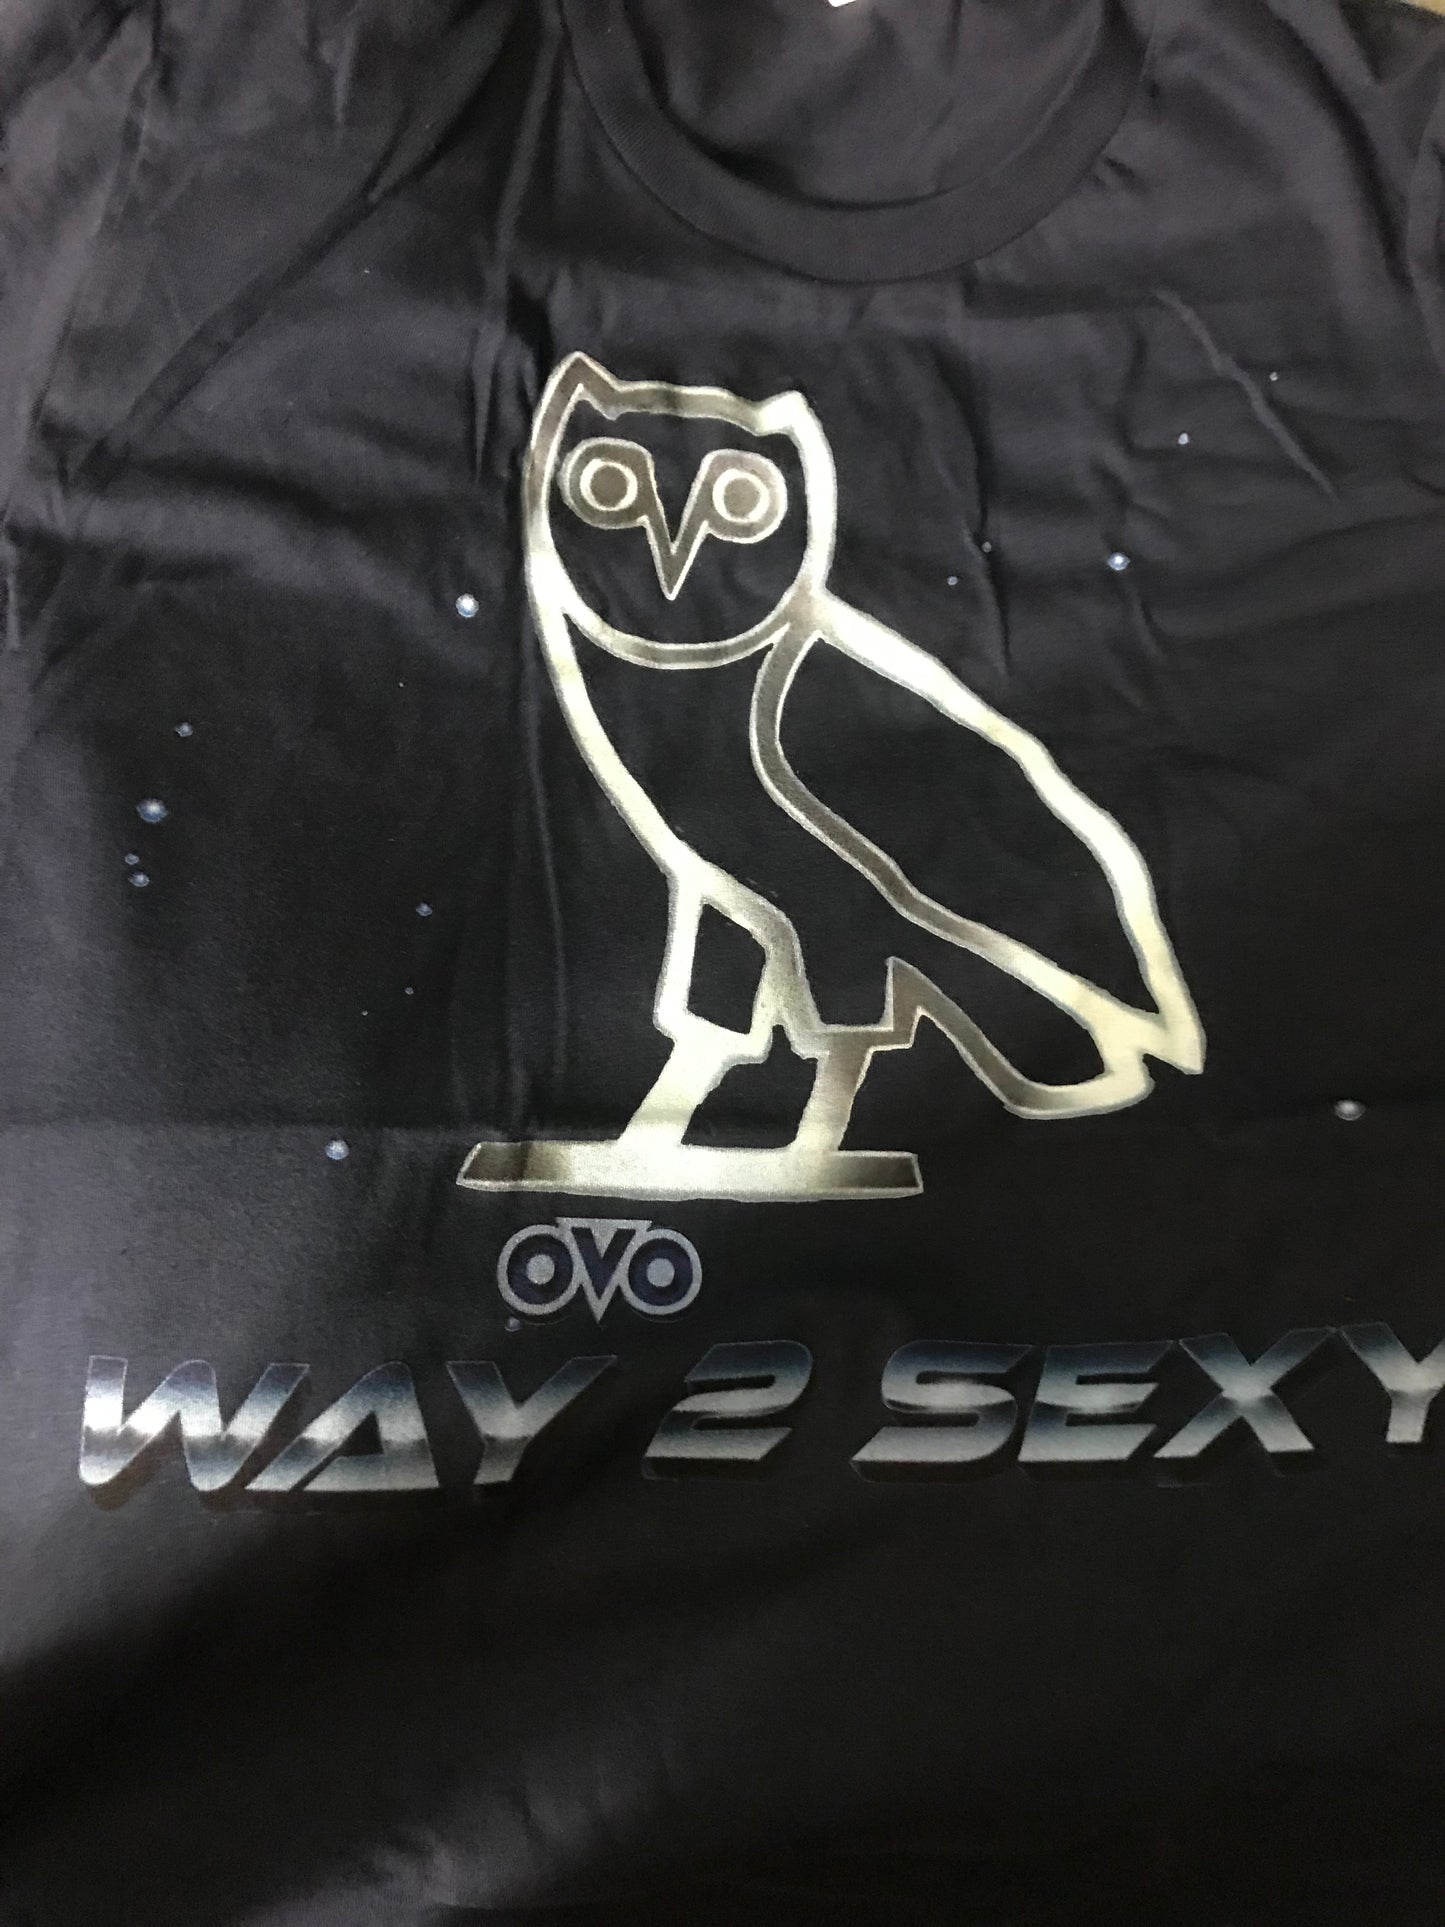 OVO Way 2 SEXY